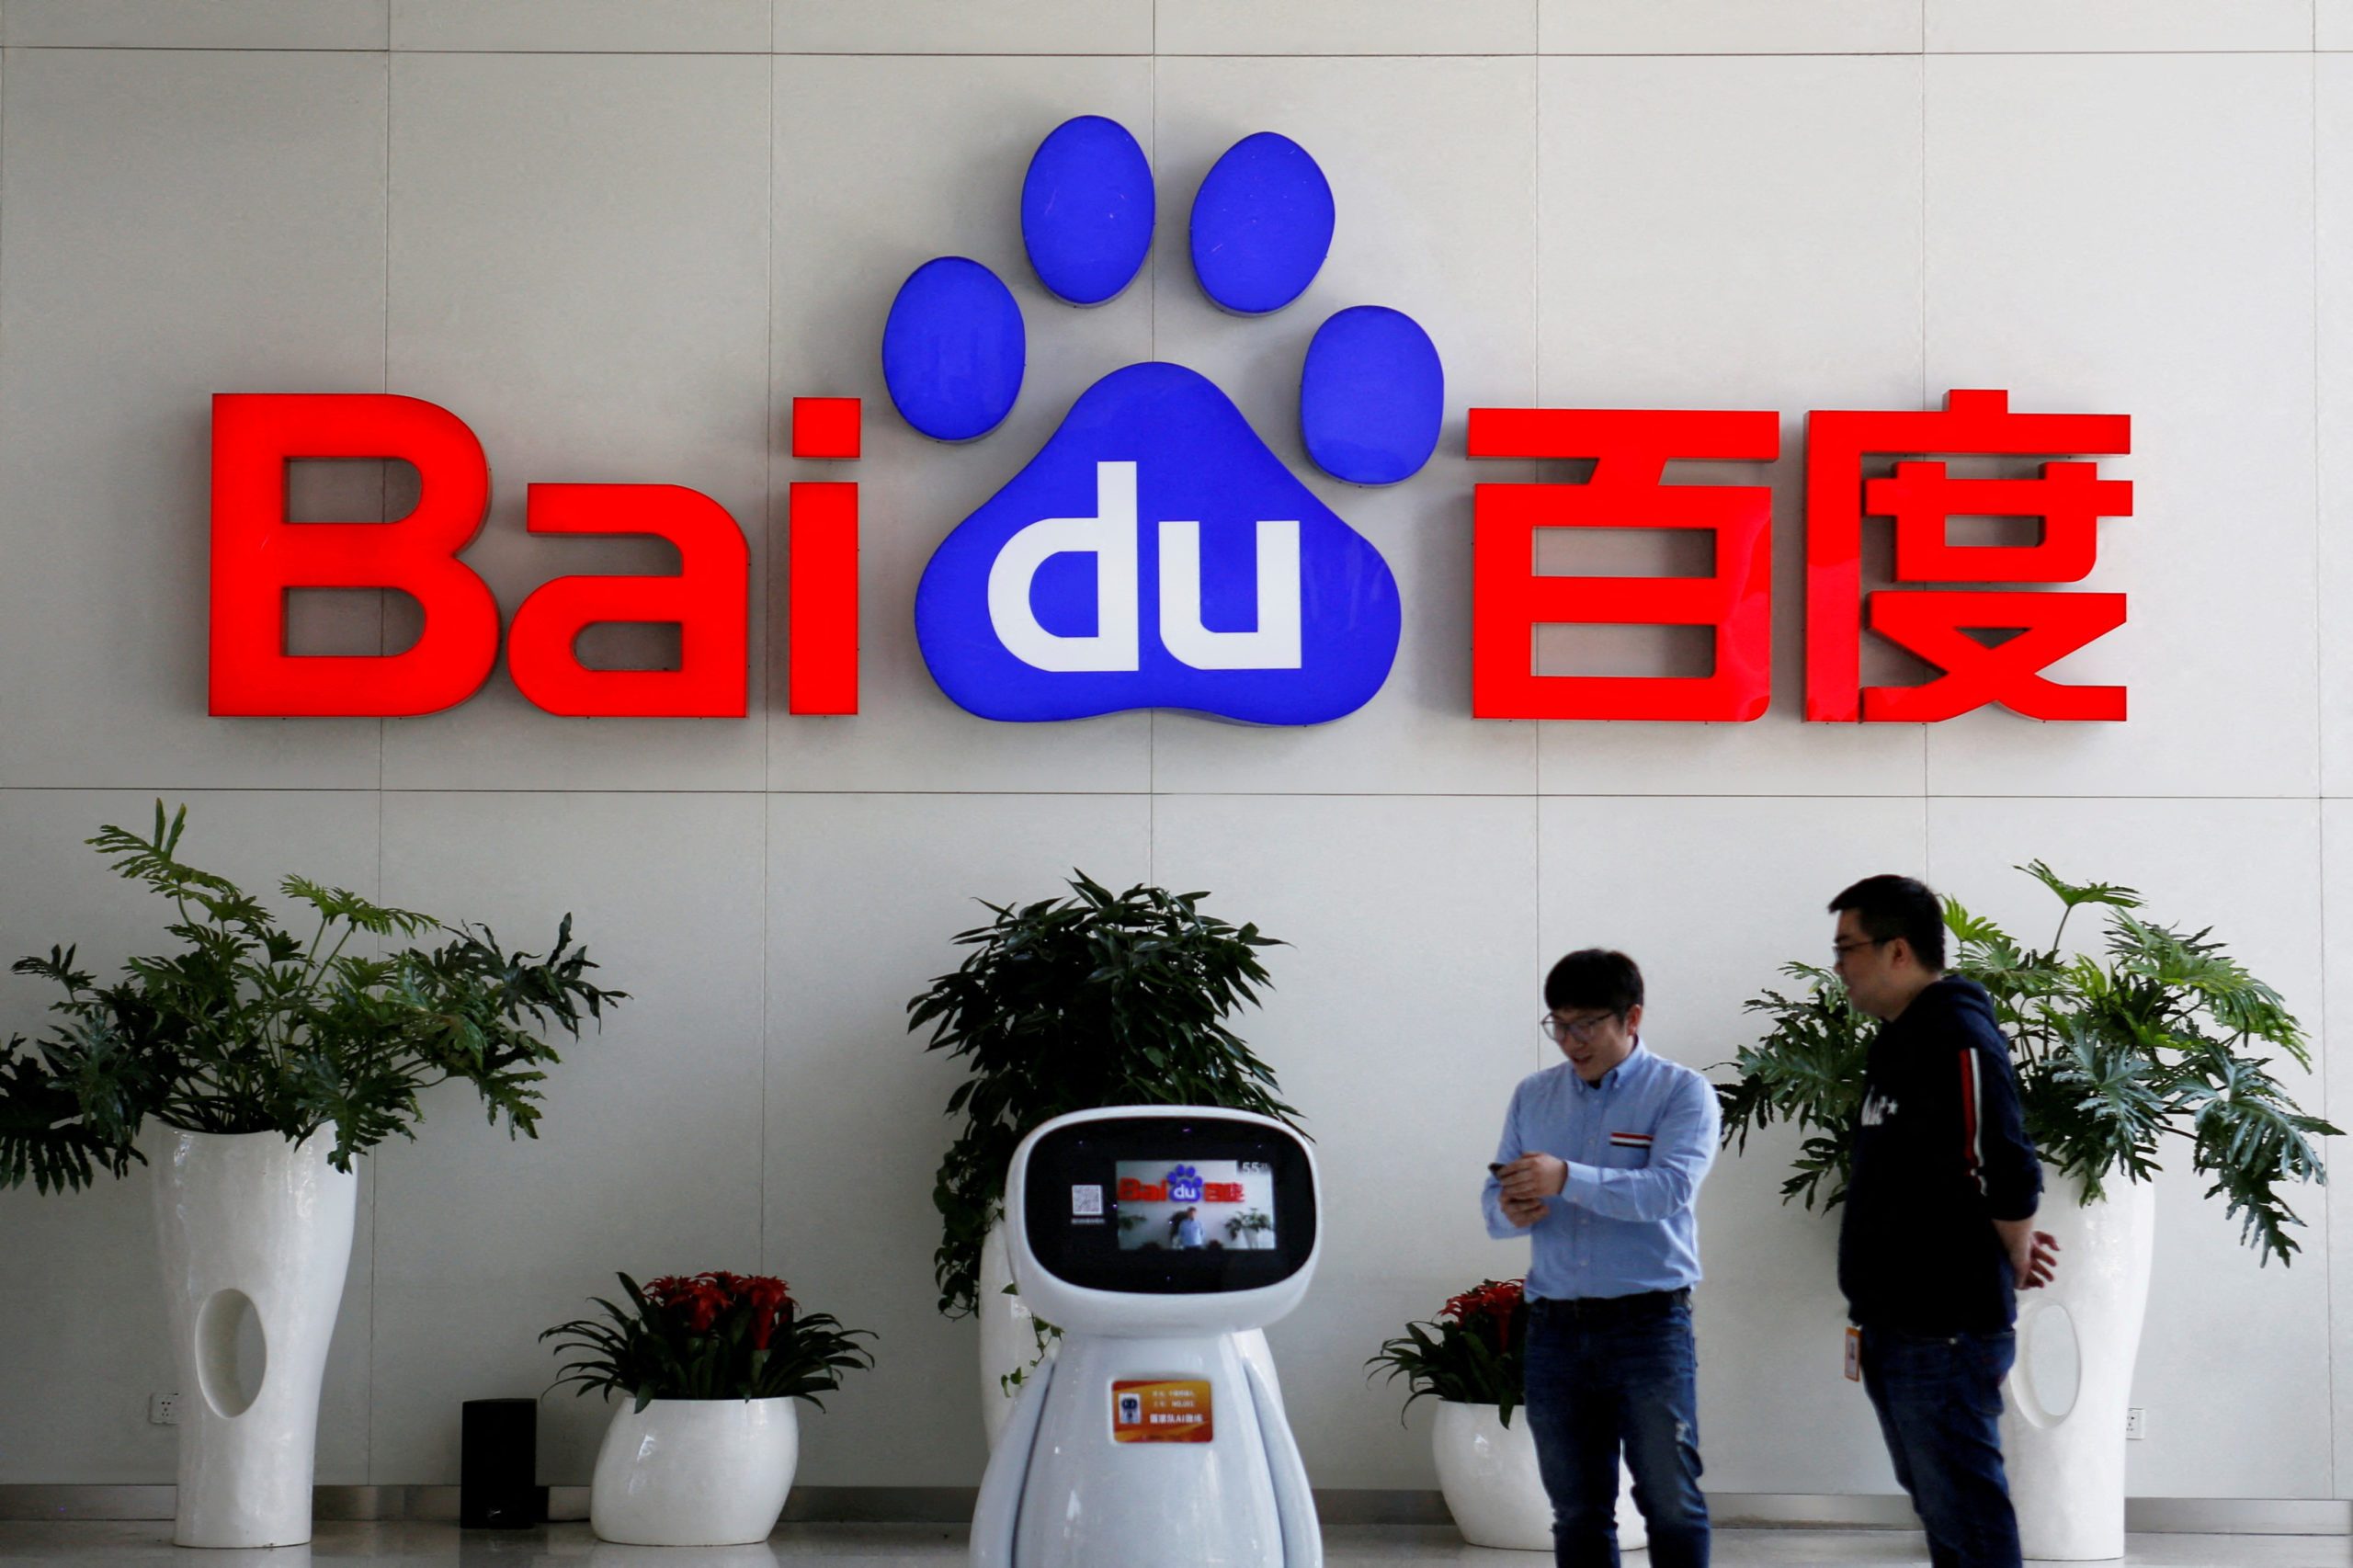 China's Baidu beats earnings estimates as chatbot awaits govt approval